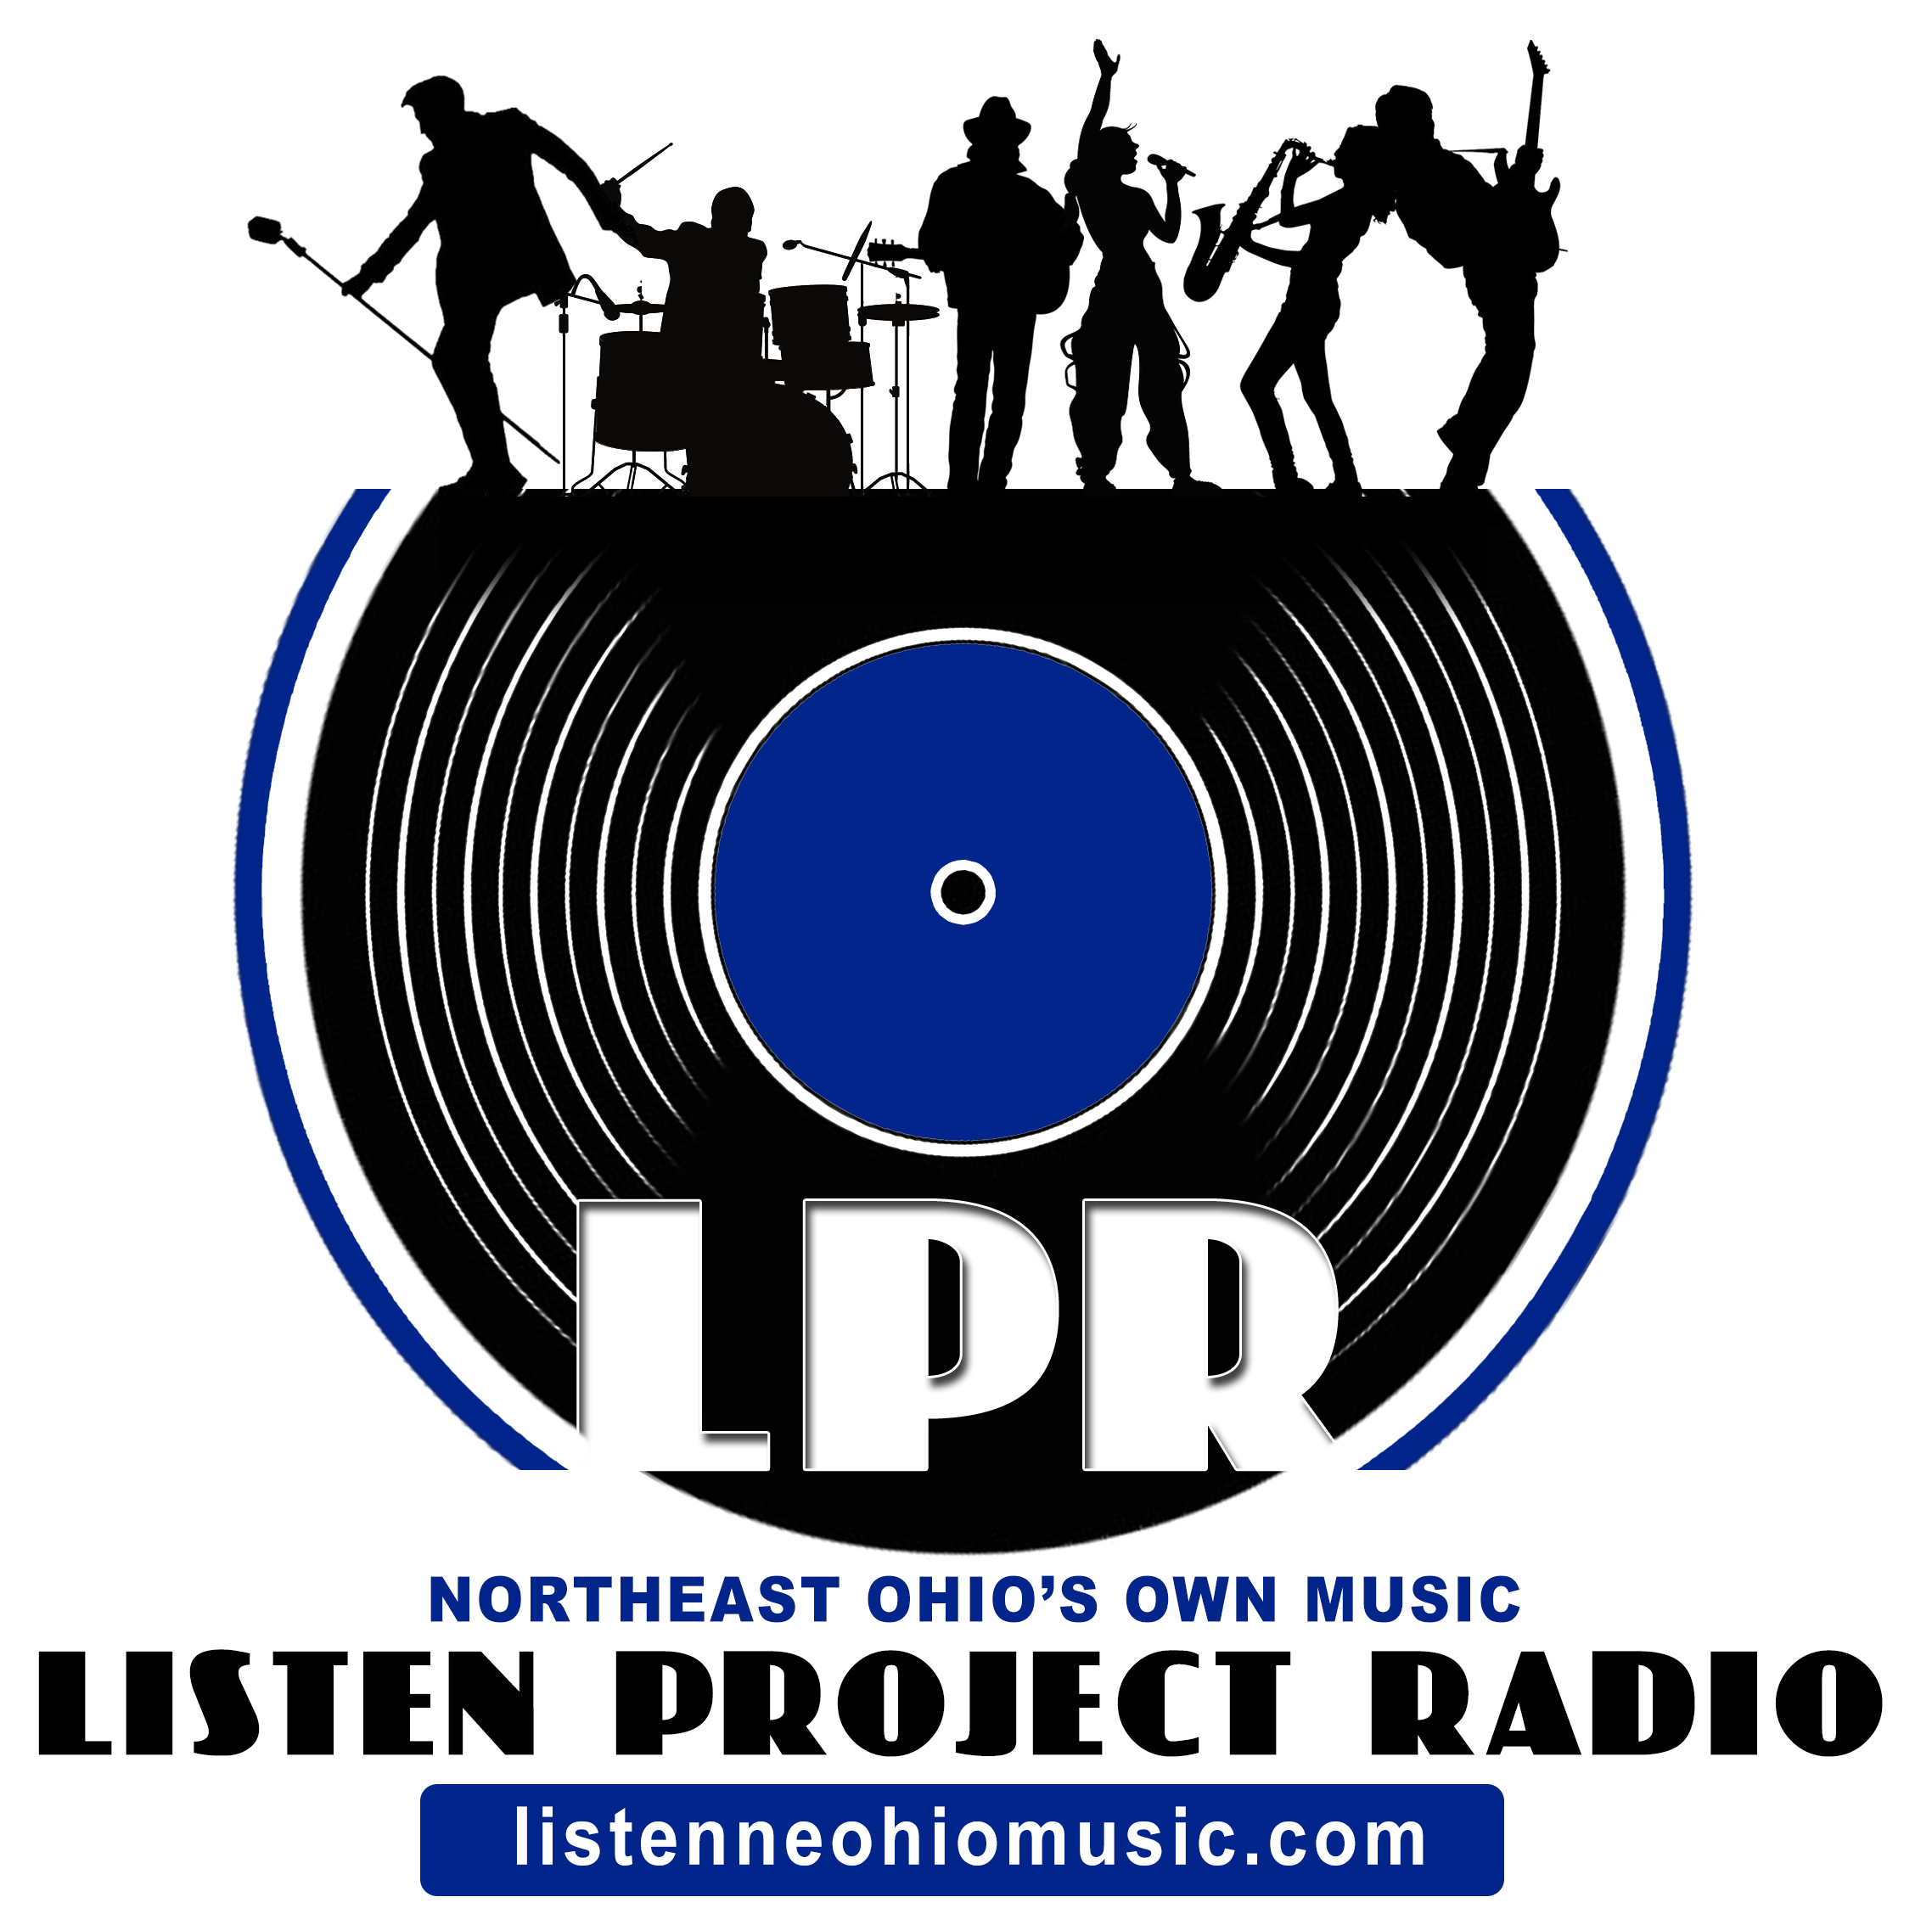 Art for New Music Showcase  by LPR - Listen Project Radio